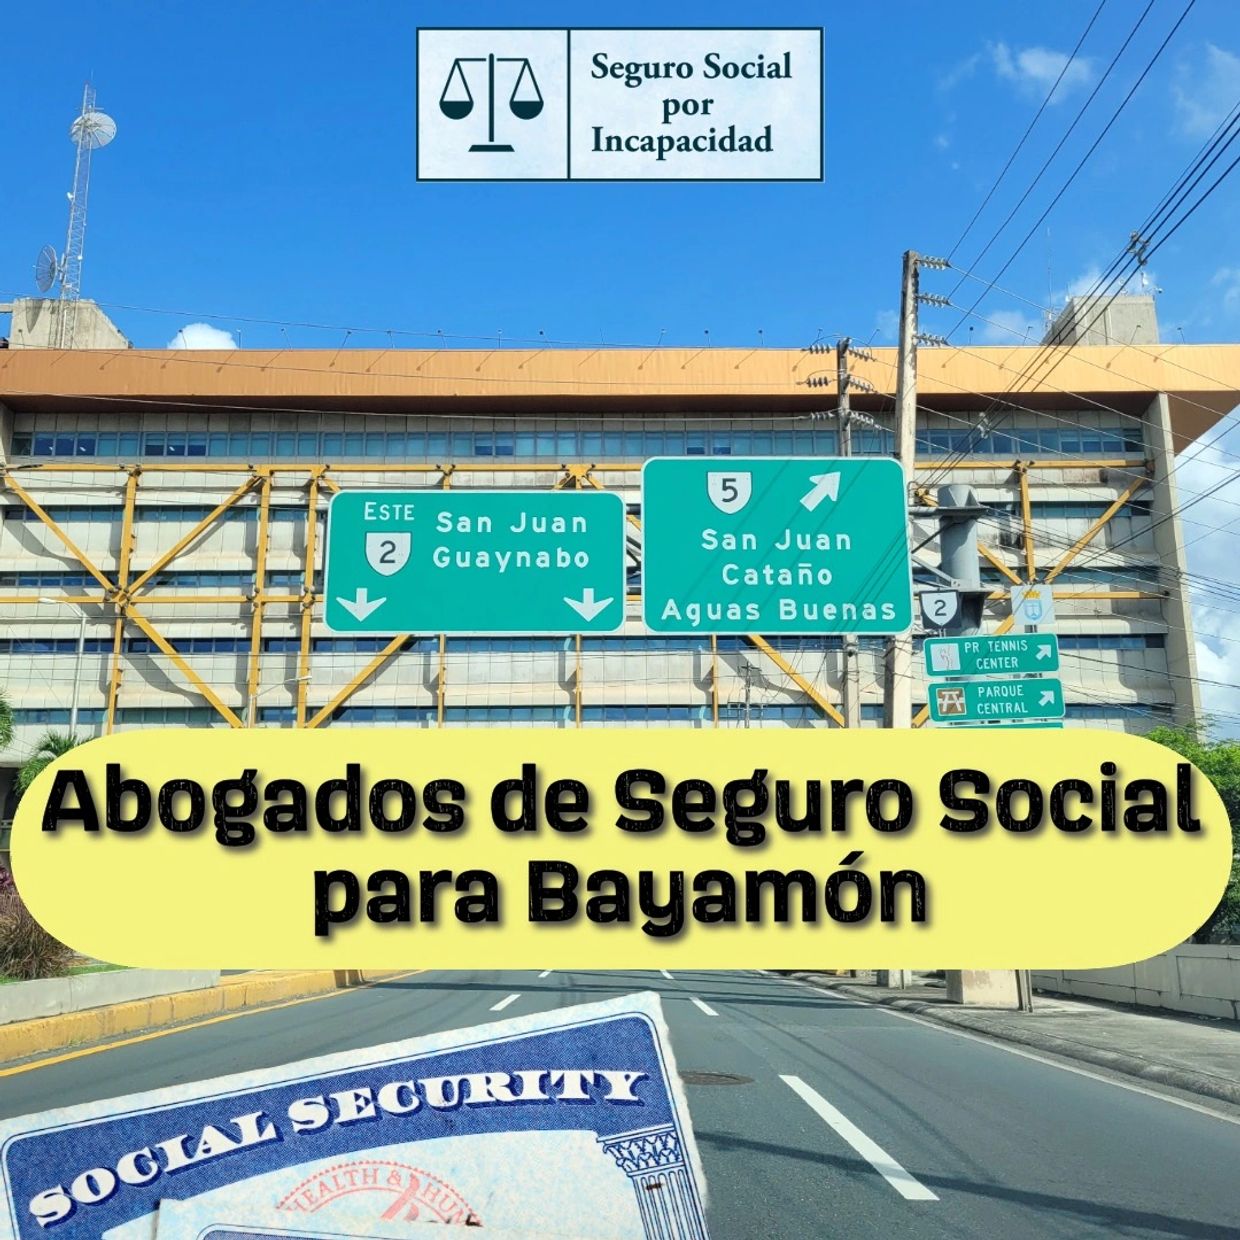 Abogados de Seguro Social por Incapacidad en Bayamón, Puerto Rico.